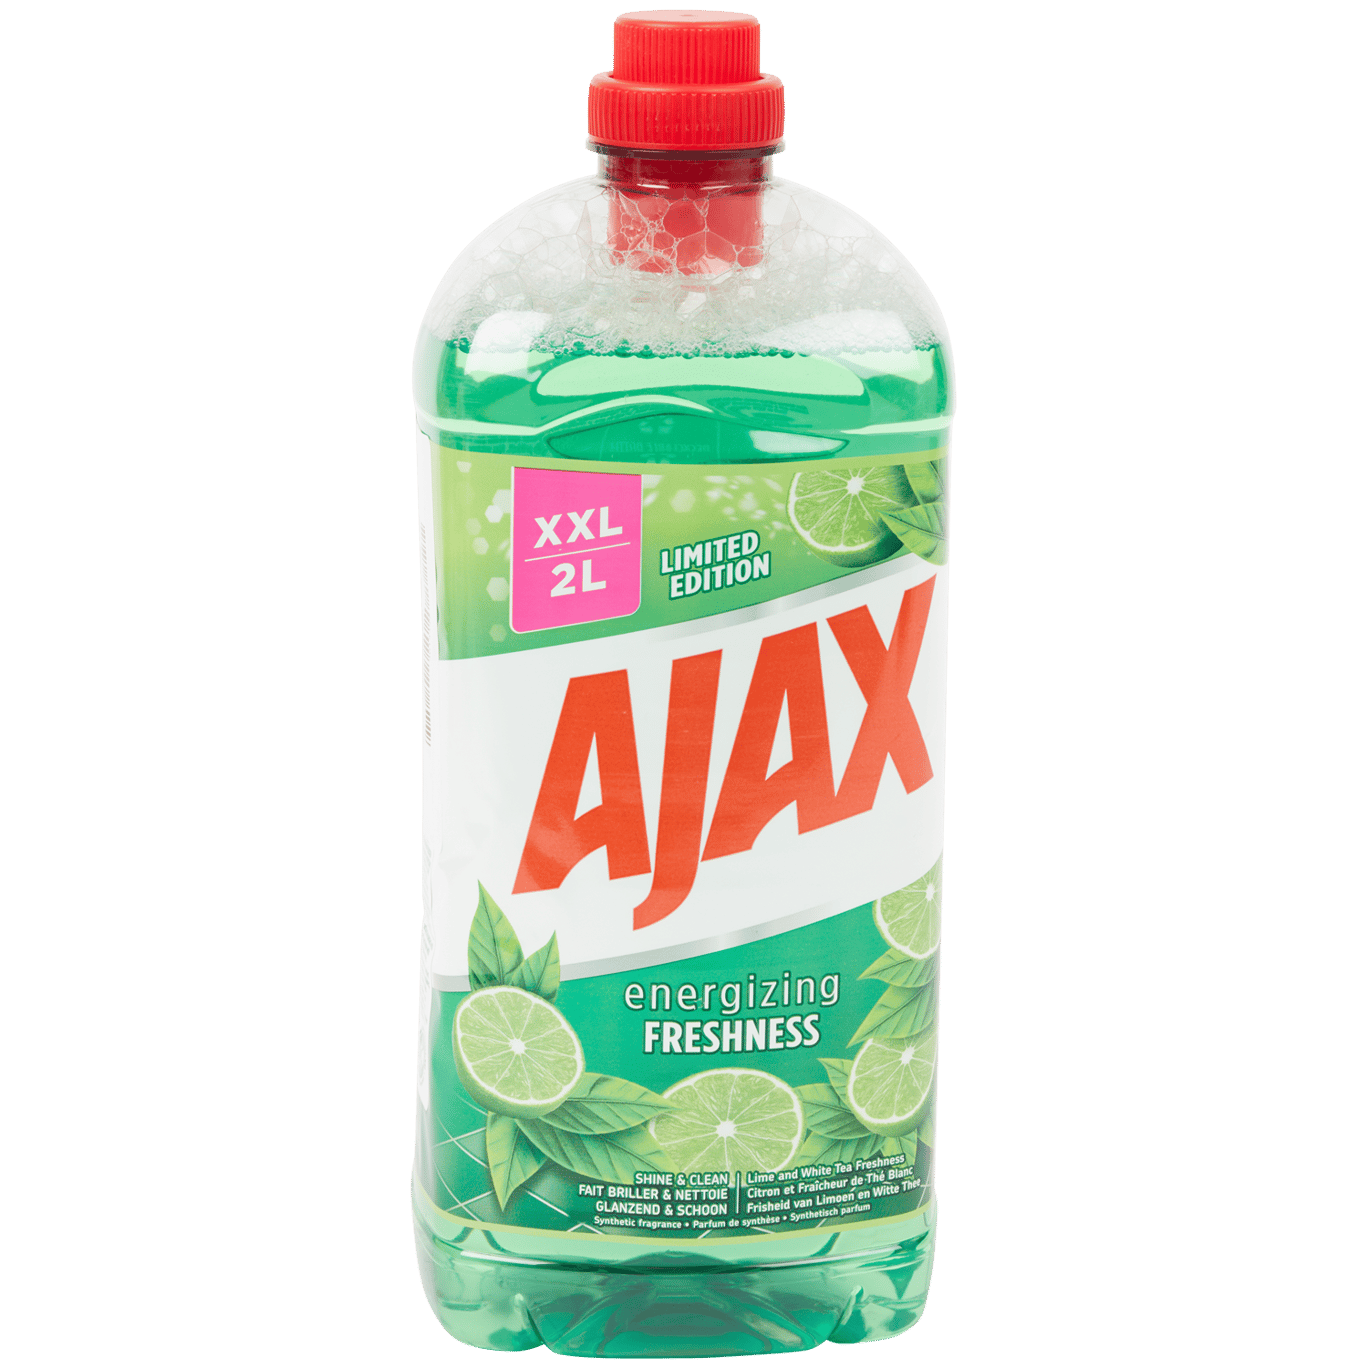 Detergente multiusos Ajax Energizing Freshness